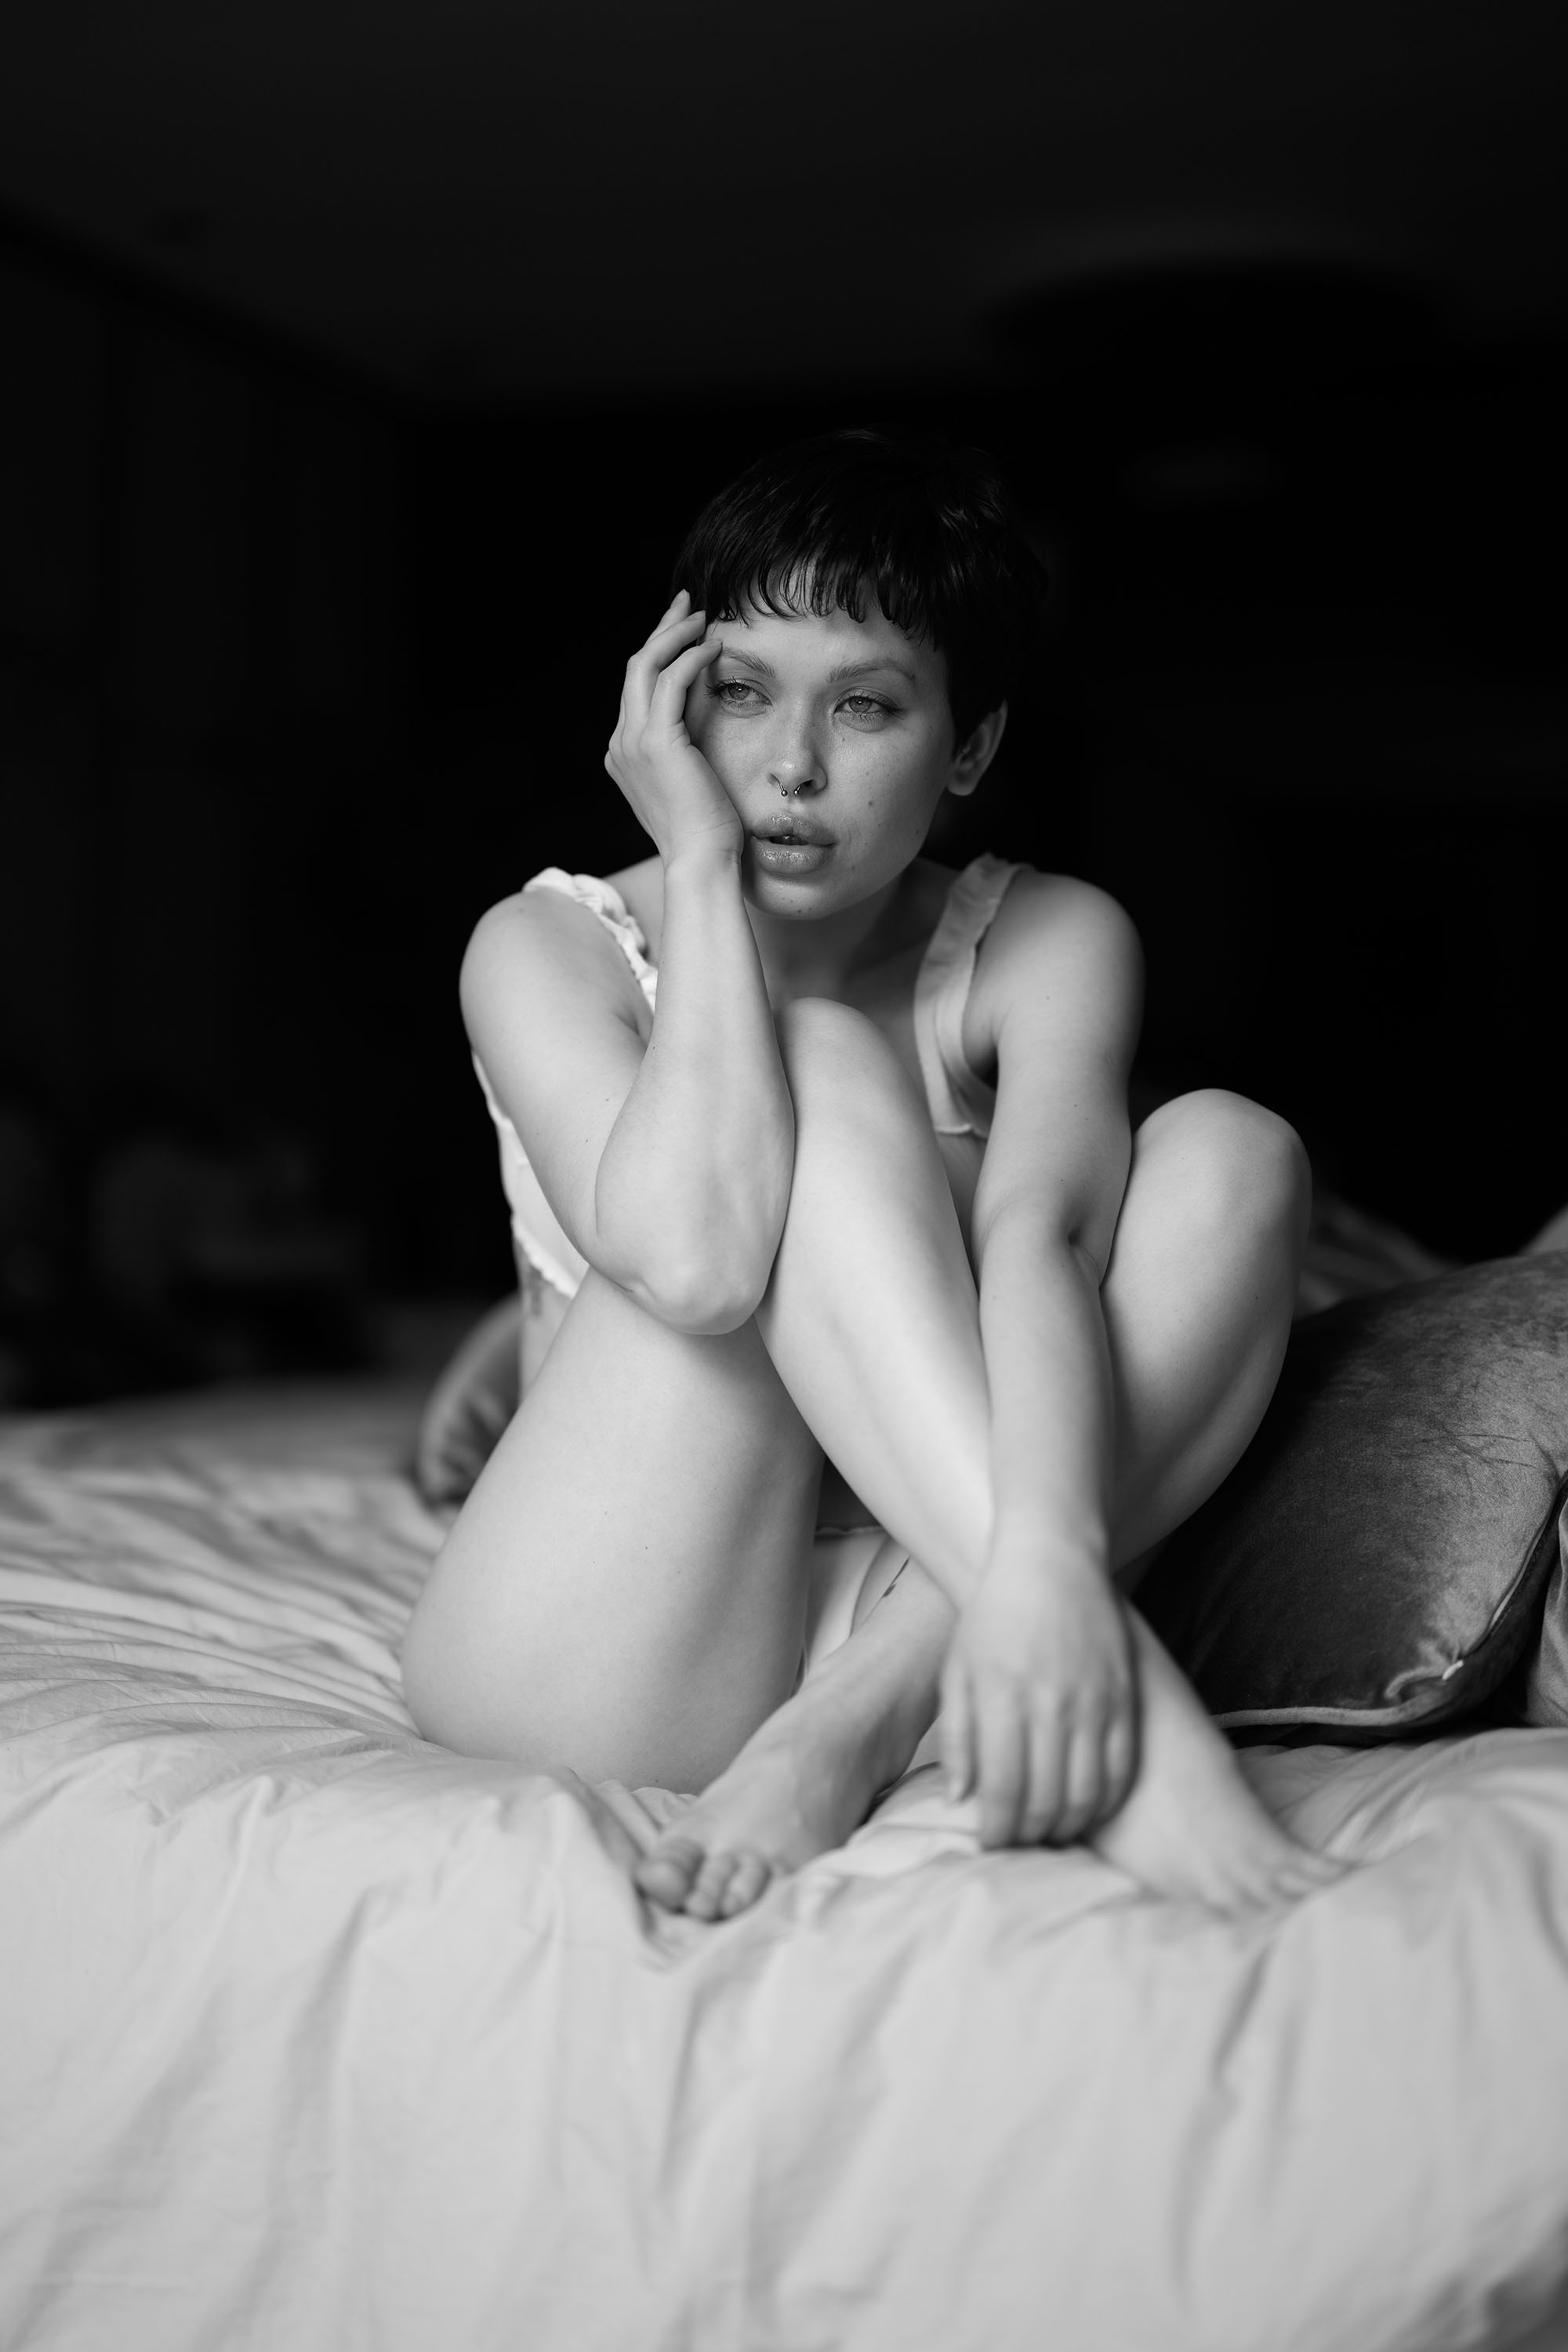 Alina Mayer, model from Ukraine at a boudoir photoshoot